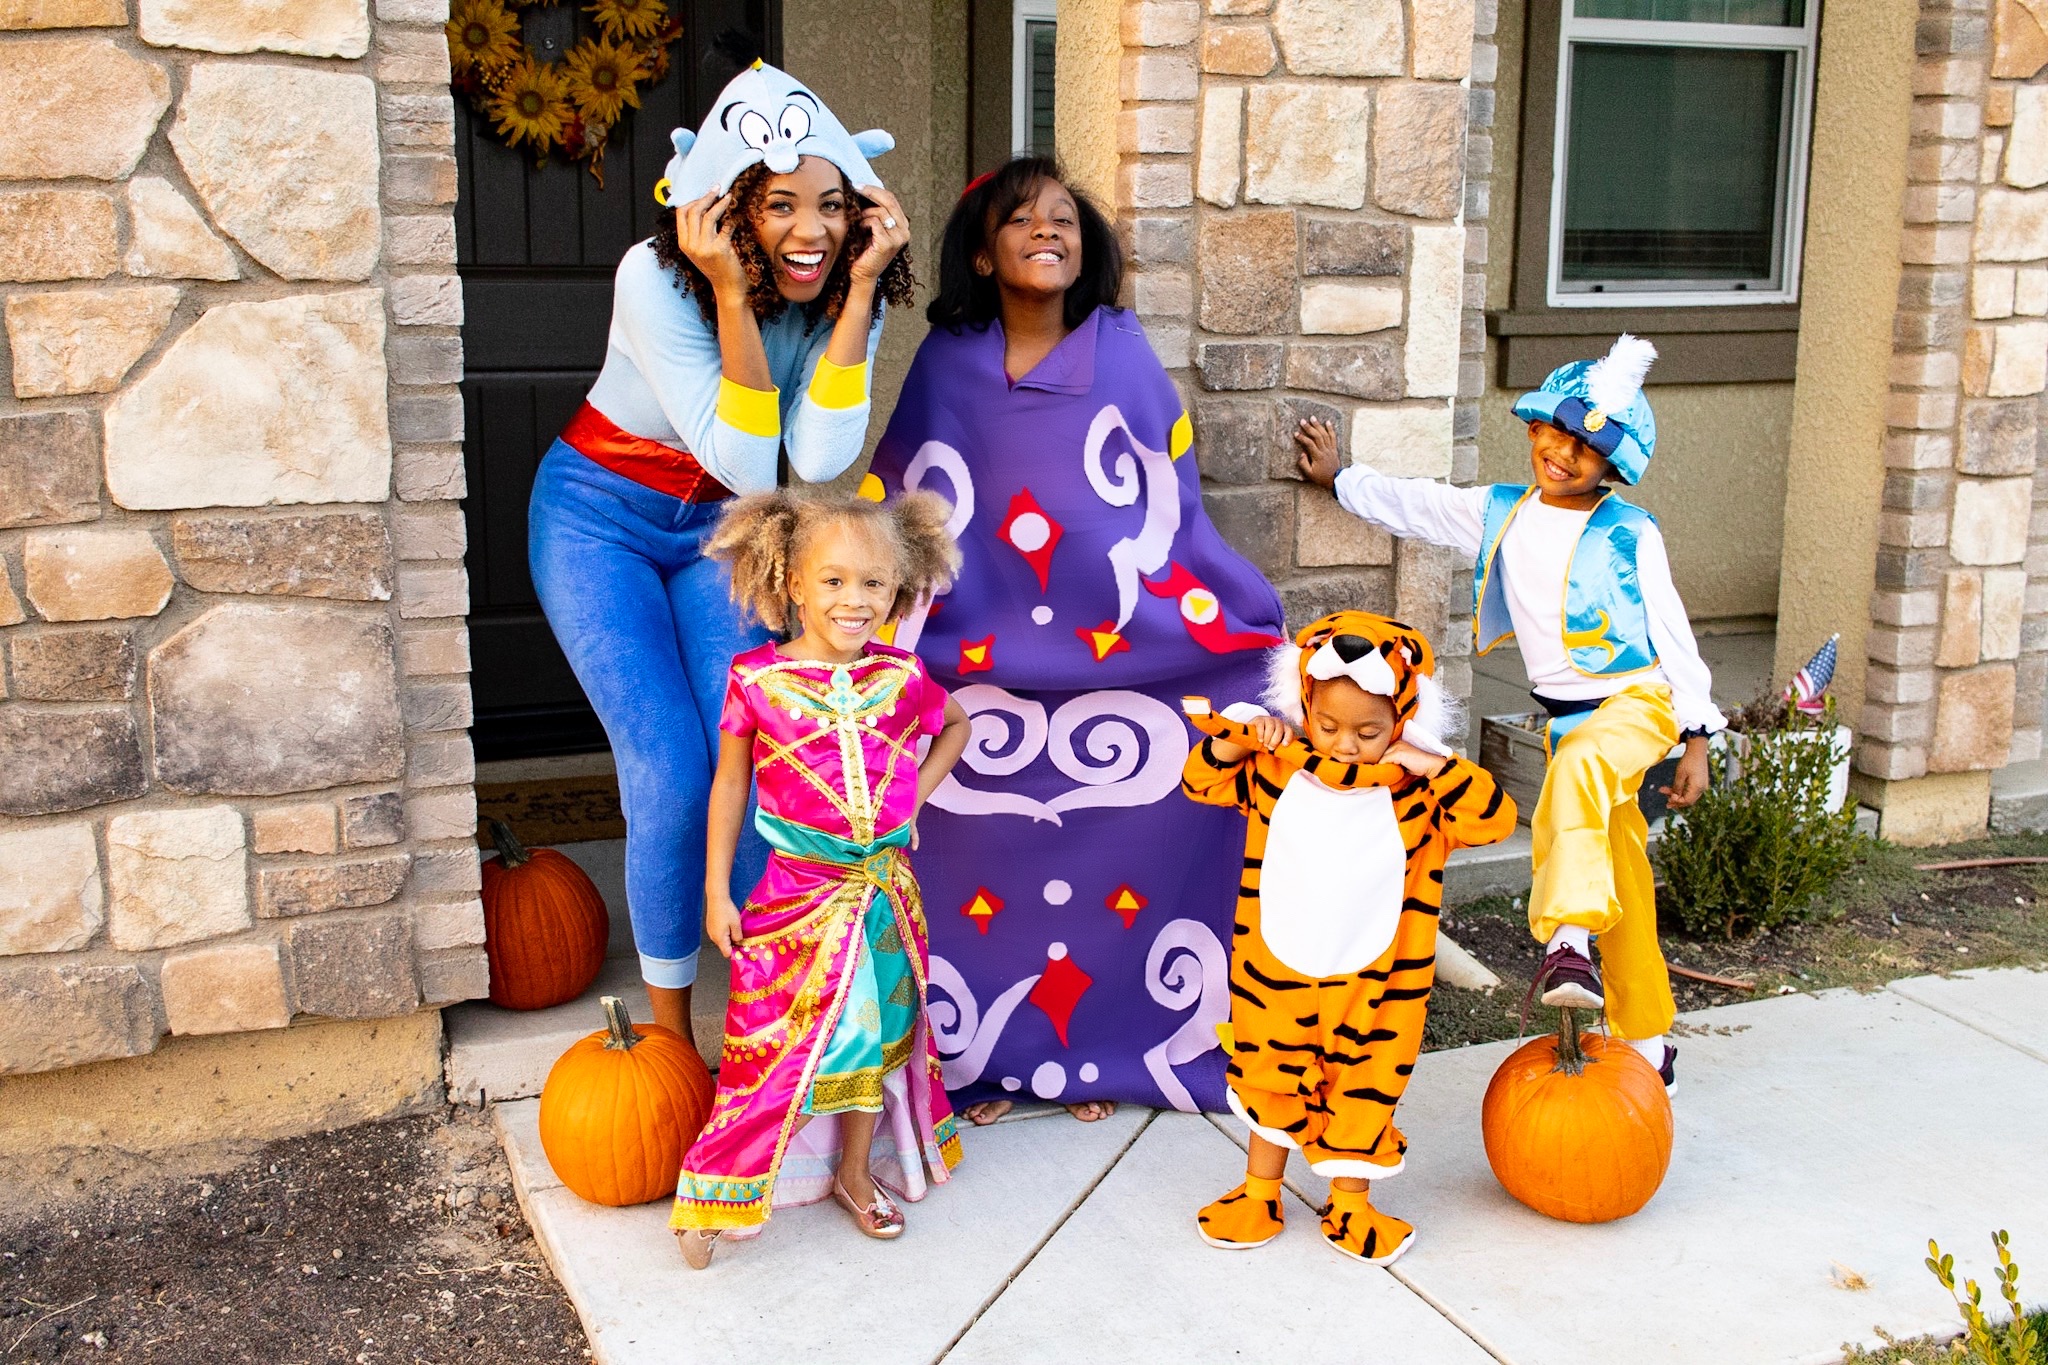 Aladdin Family themed costumes